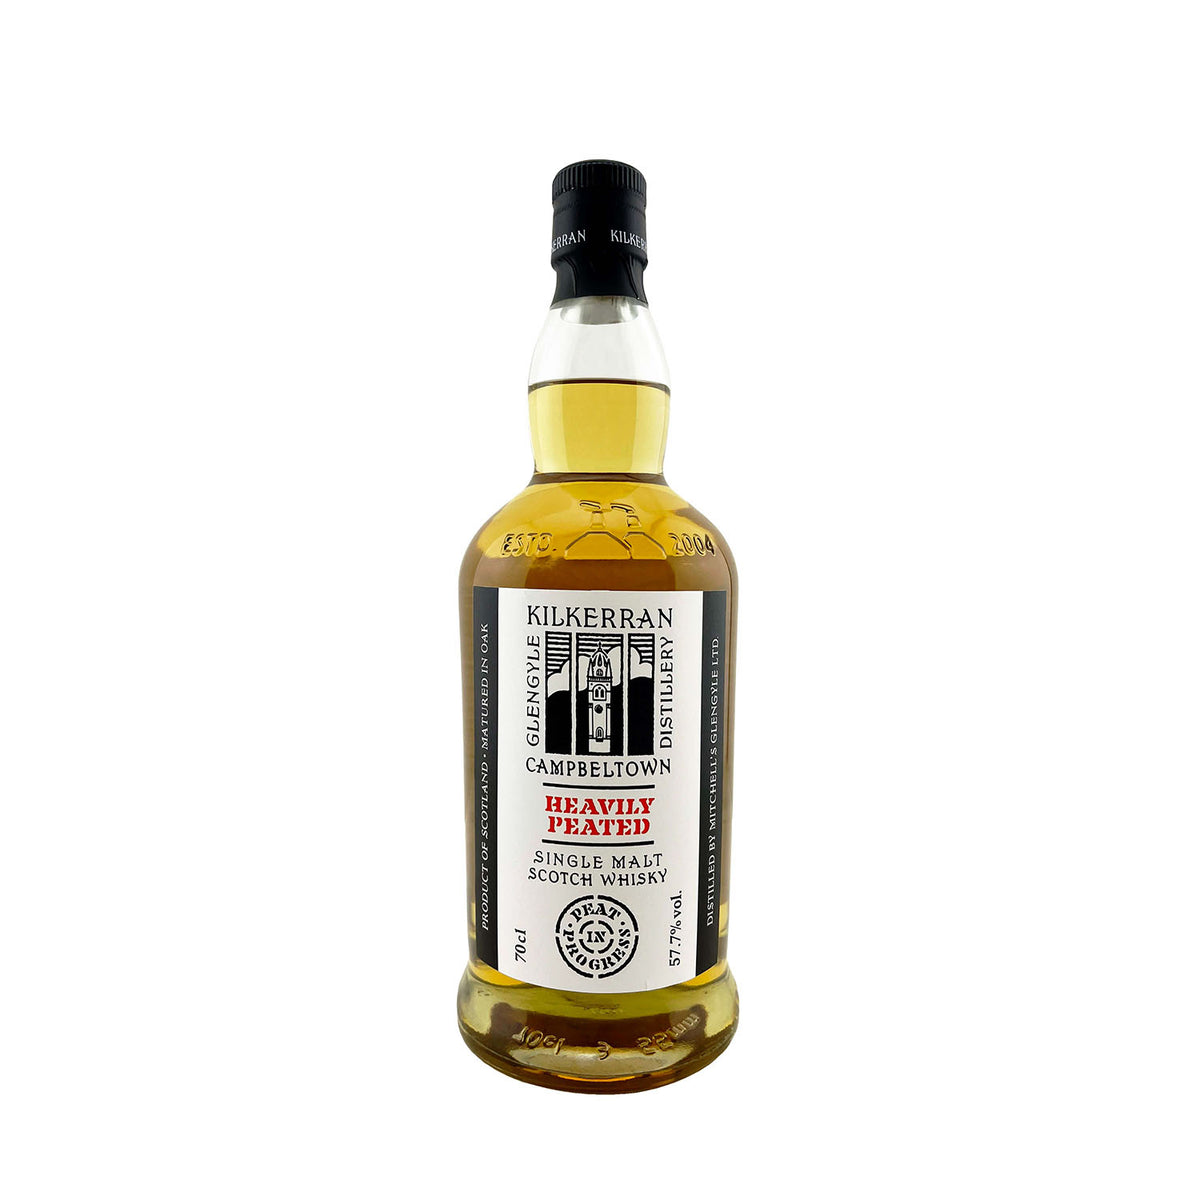 Kilkerran Heavily Peated (57.7%) Single Malt Whisky 700ml